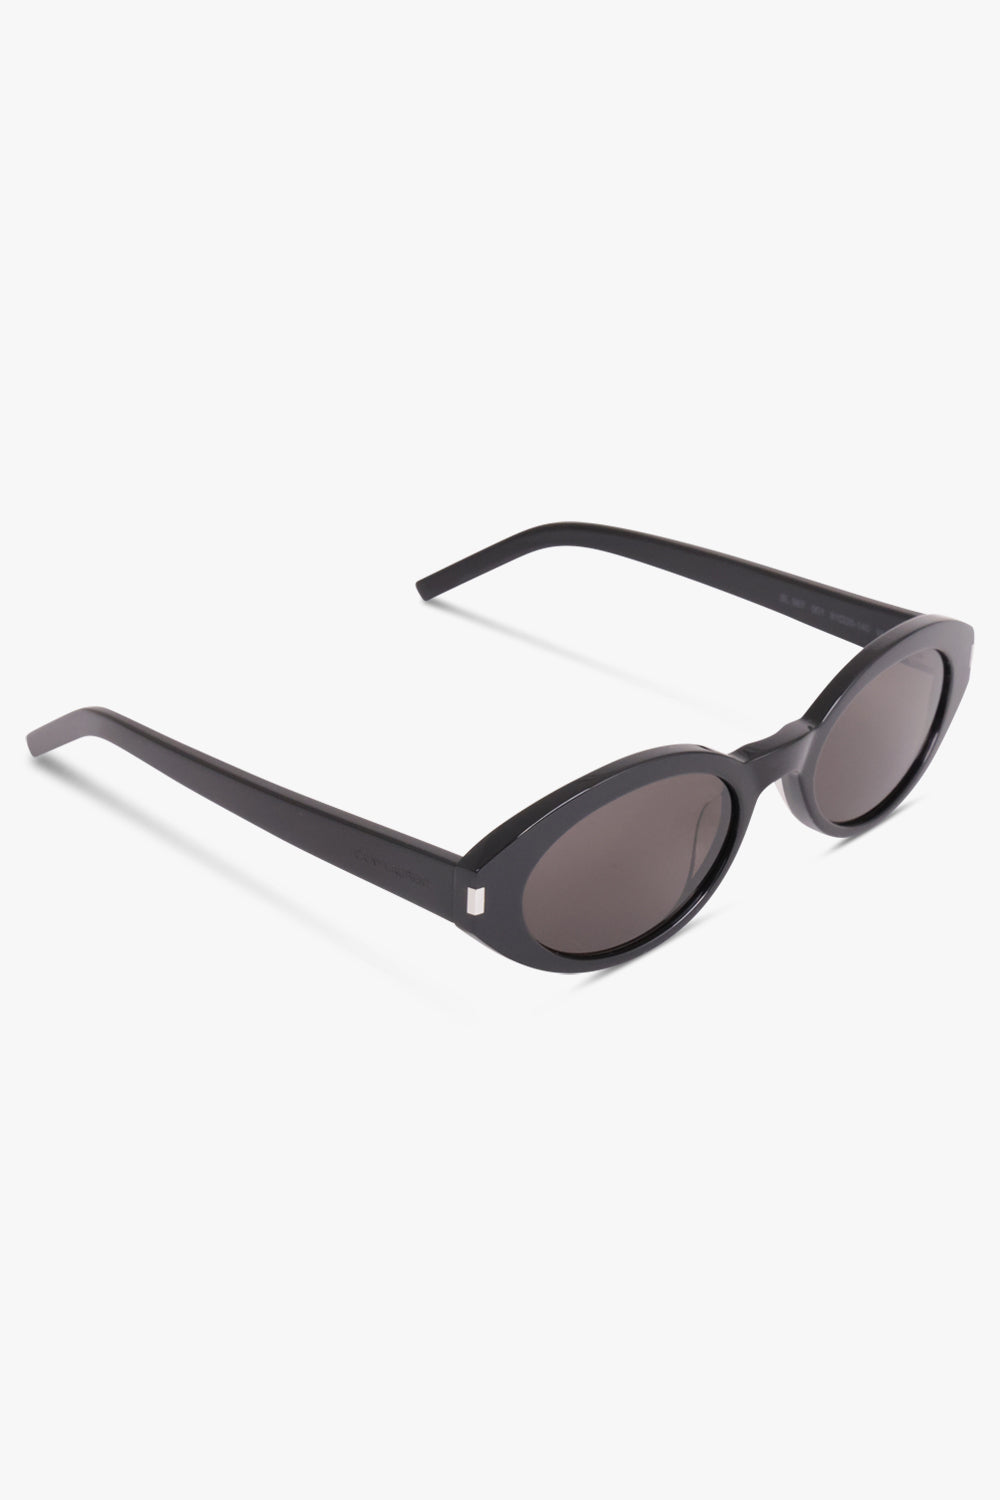 SAINT LAURENT ACCESSORIES BLACK / BLACK SL 567 Oval Frame Sunglasses | Black